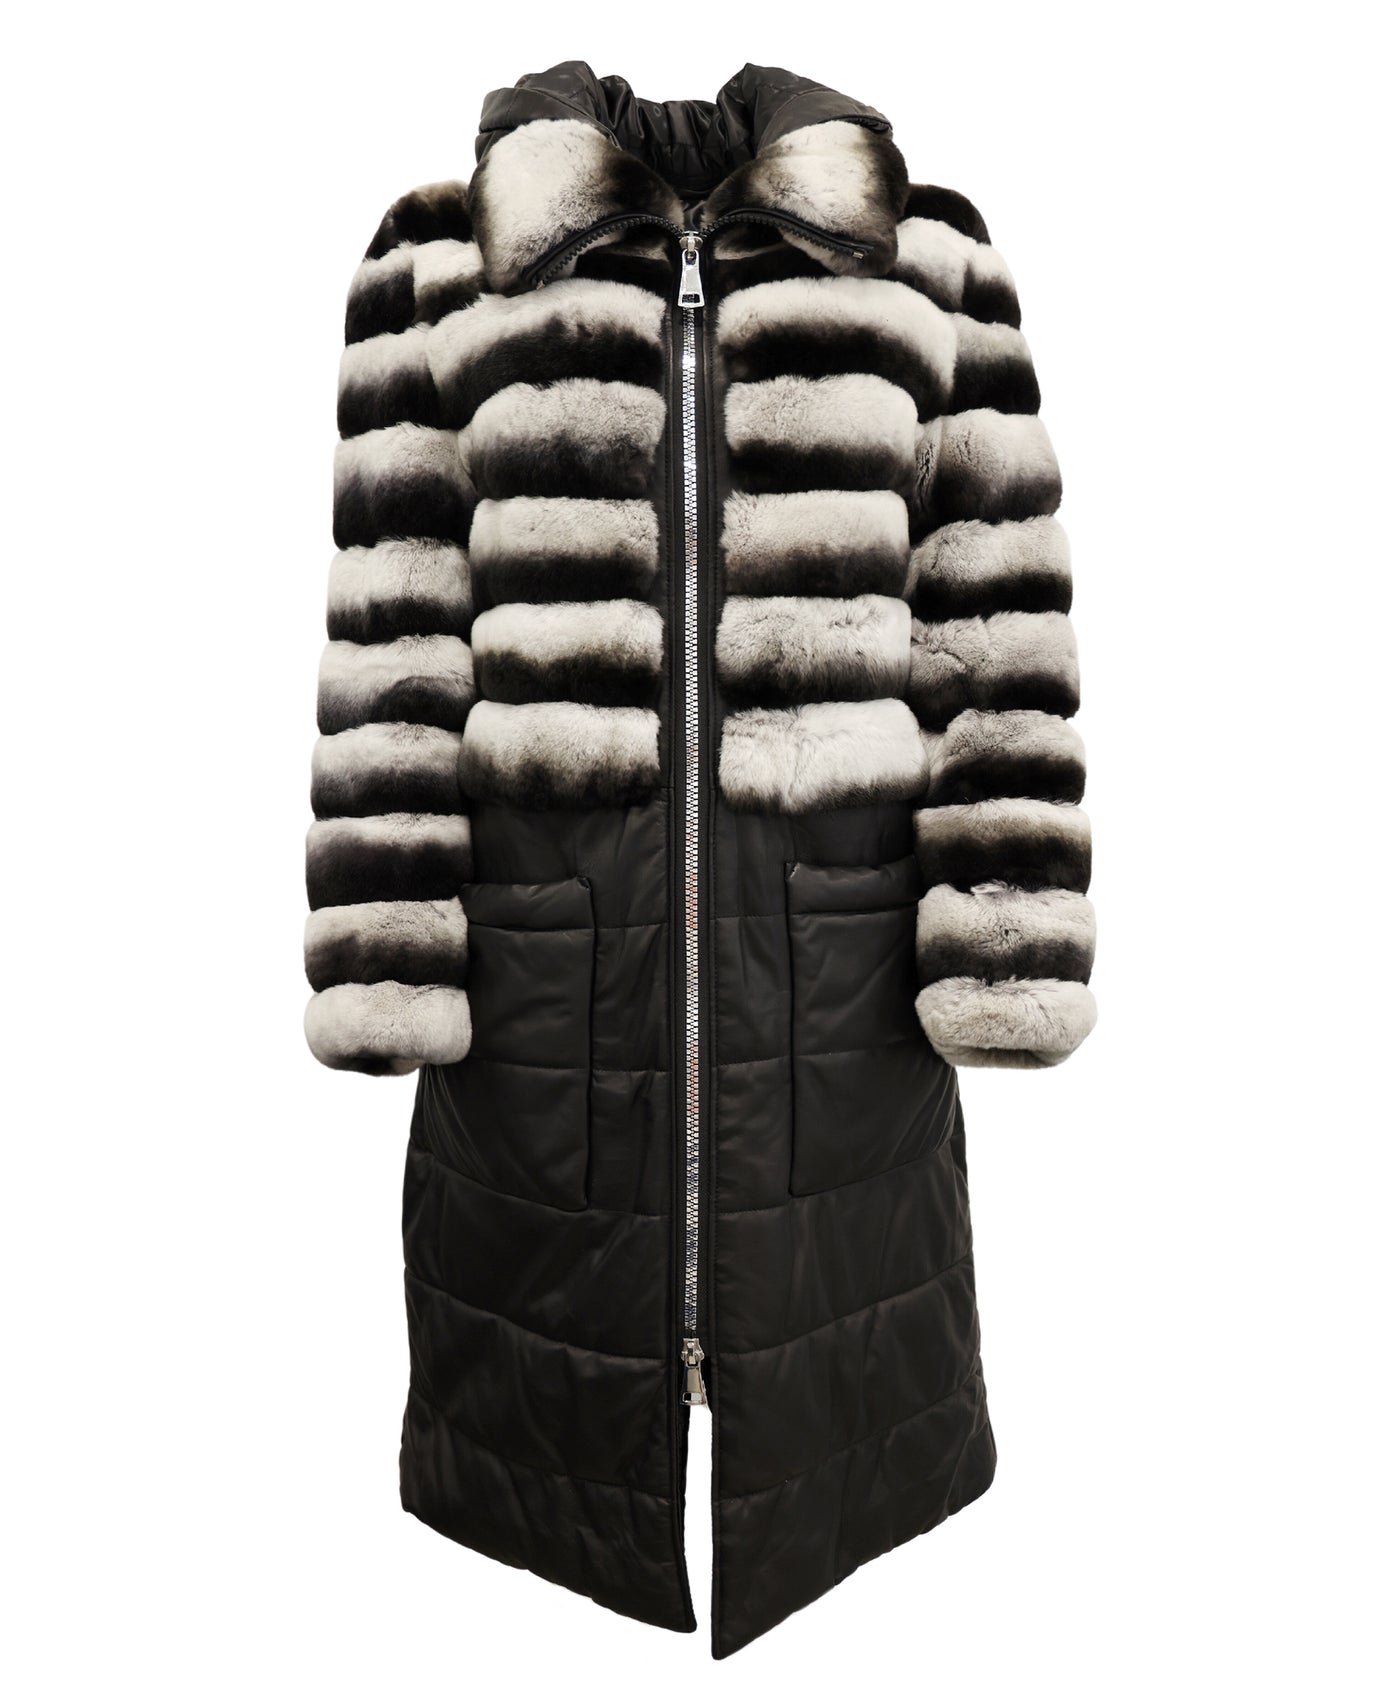 Fur Coat w/ Hood image 1